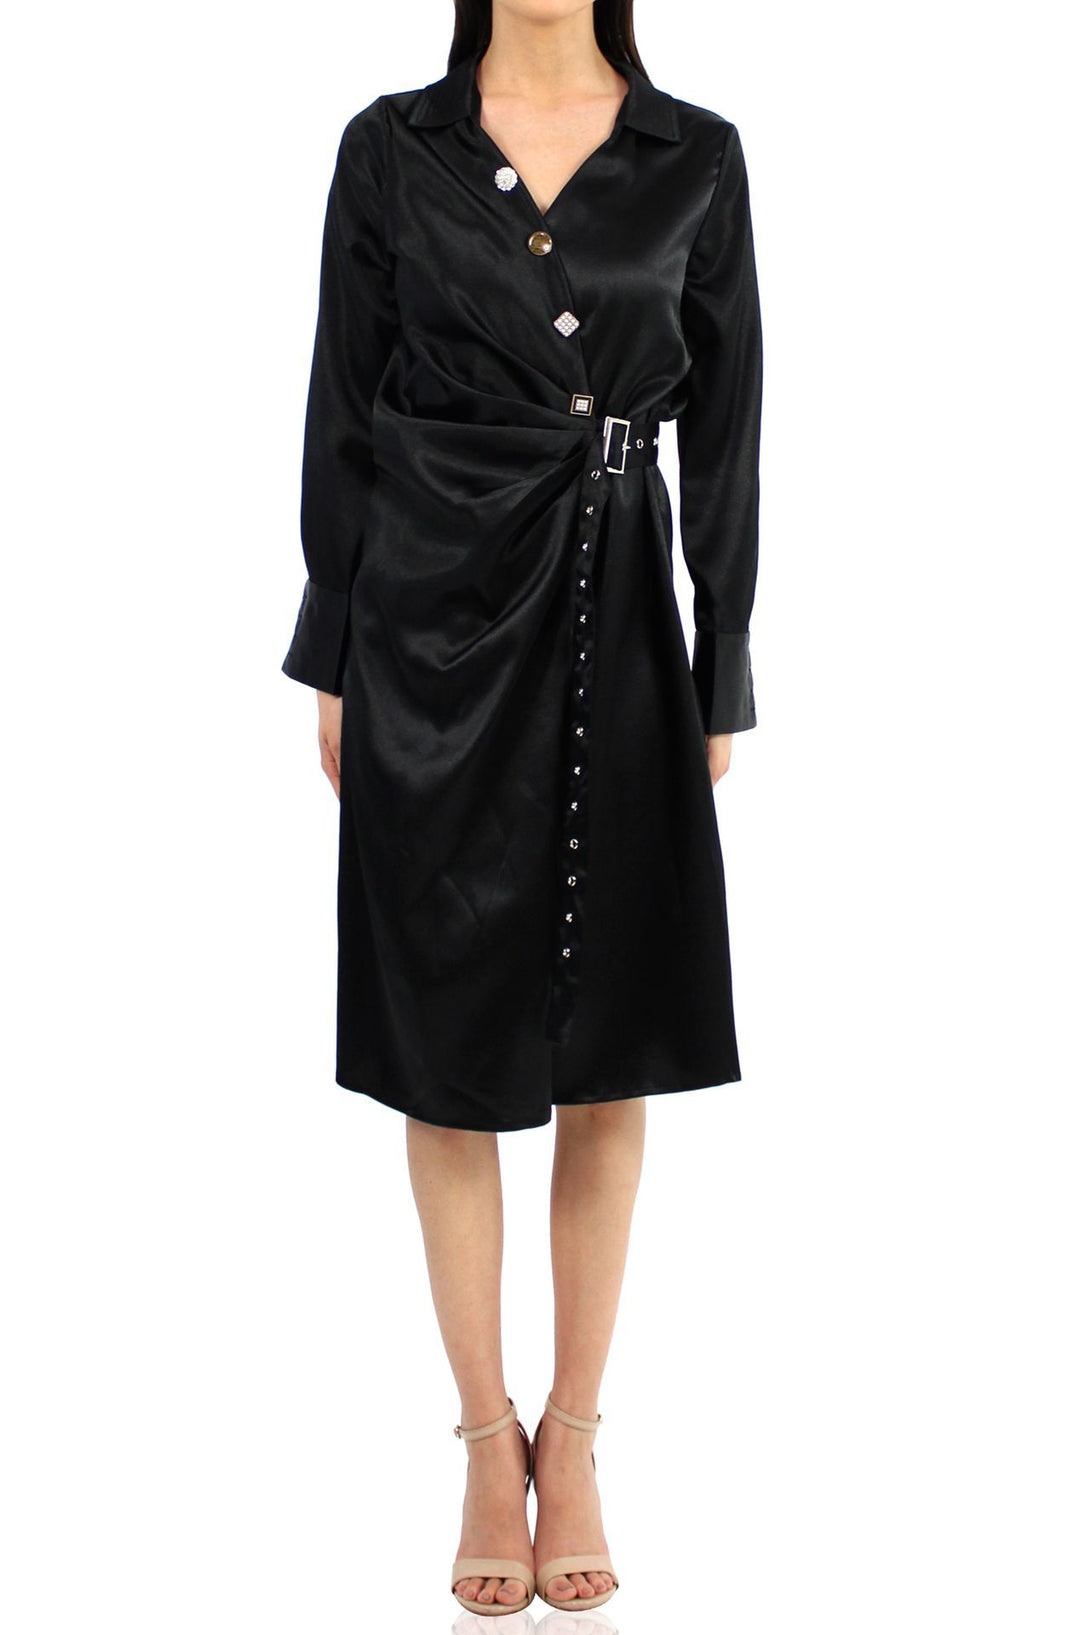 Women-Designer-Mini-Dress-In-Solid-Black-By-Kyle